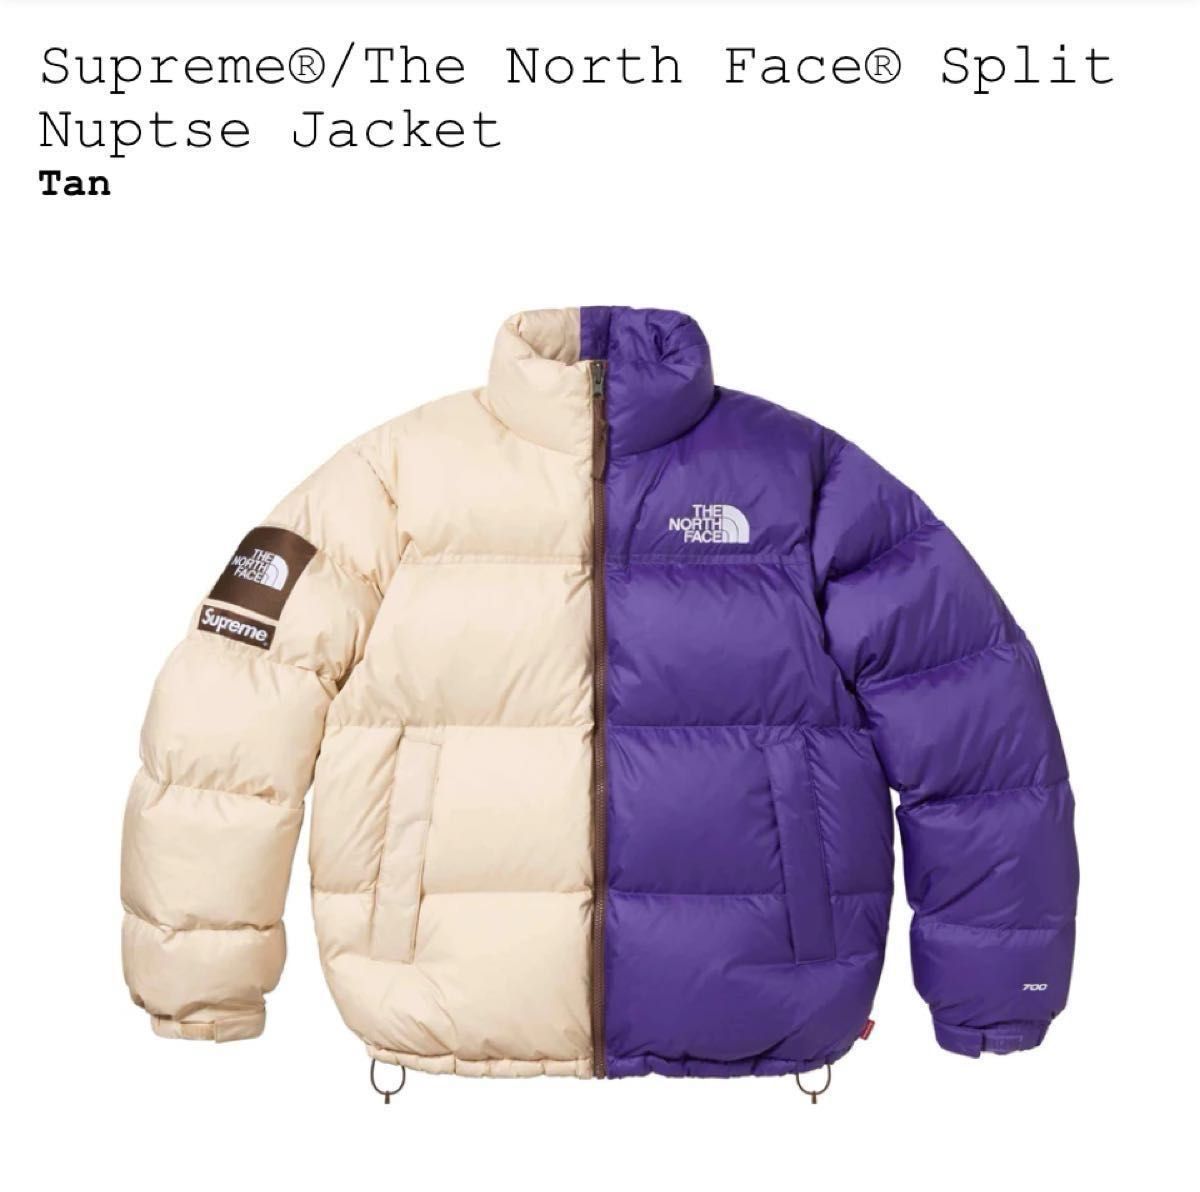 Supreme The North Face Split Nuptse Jacket Tan size M 24 S/S